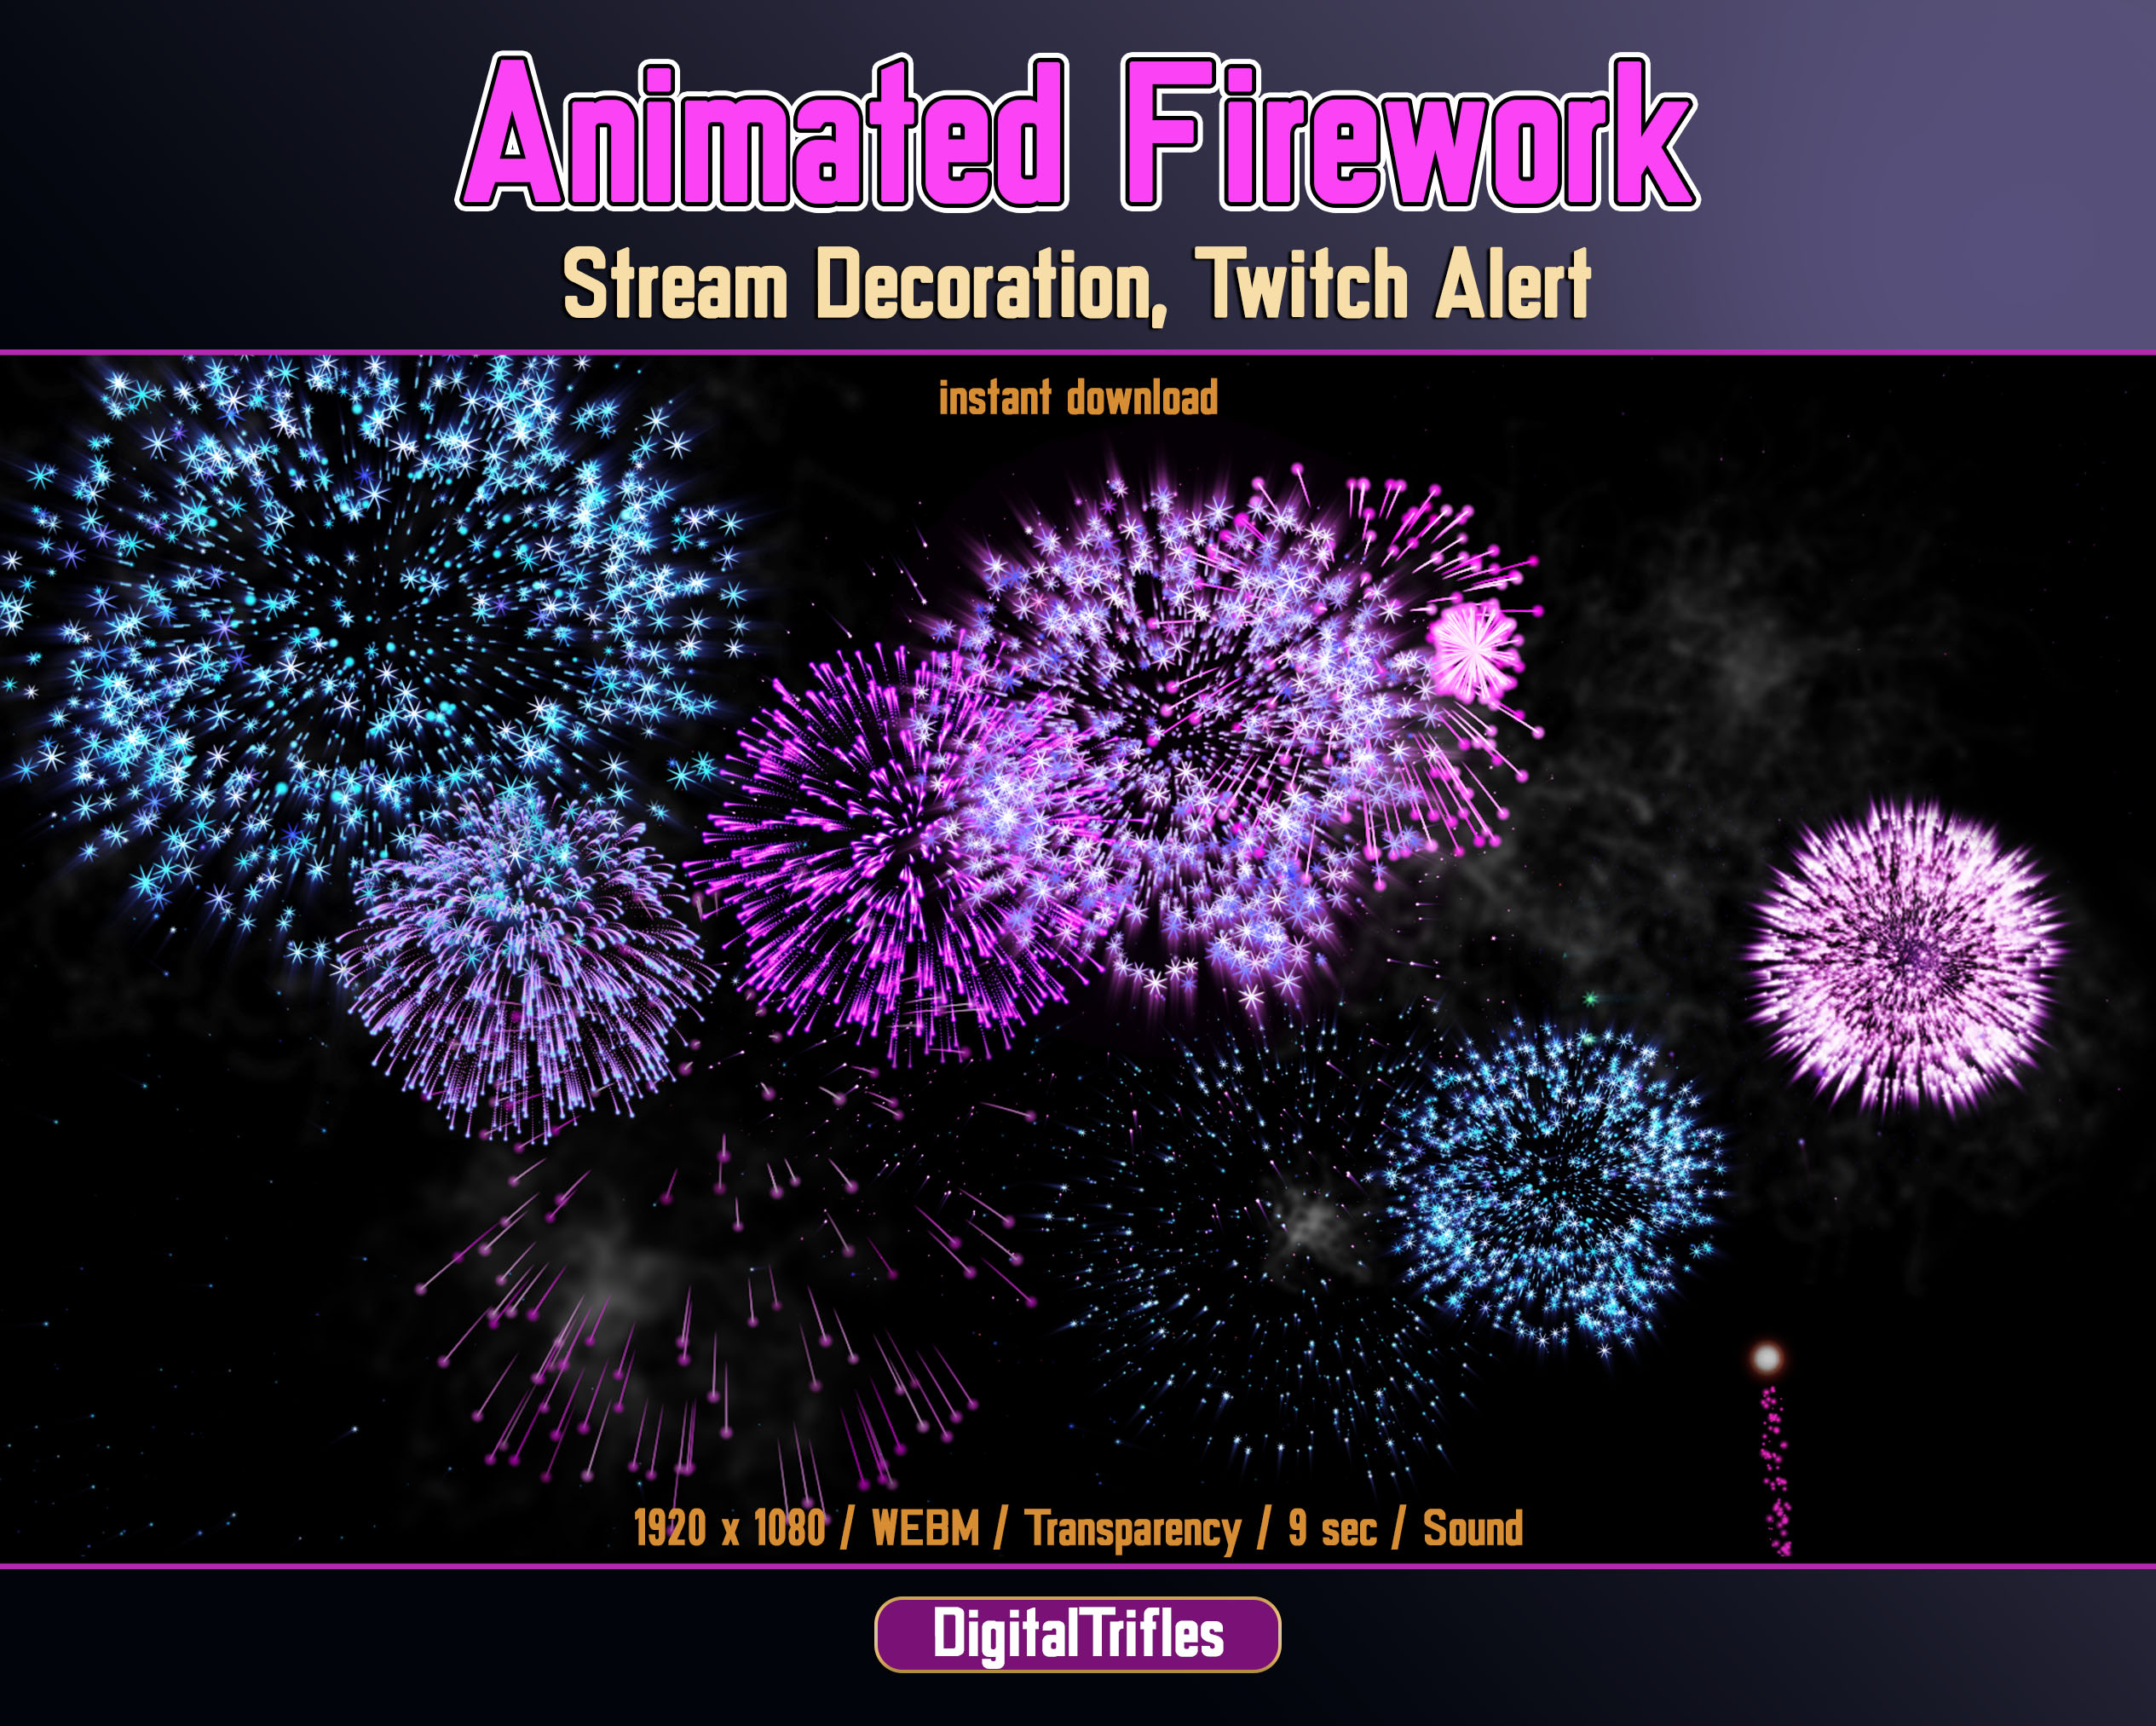 Animated Fireworks Twitch Alert, Stream Decoration, Full Screen